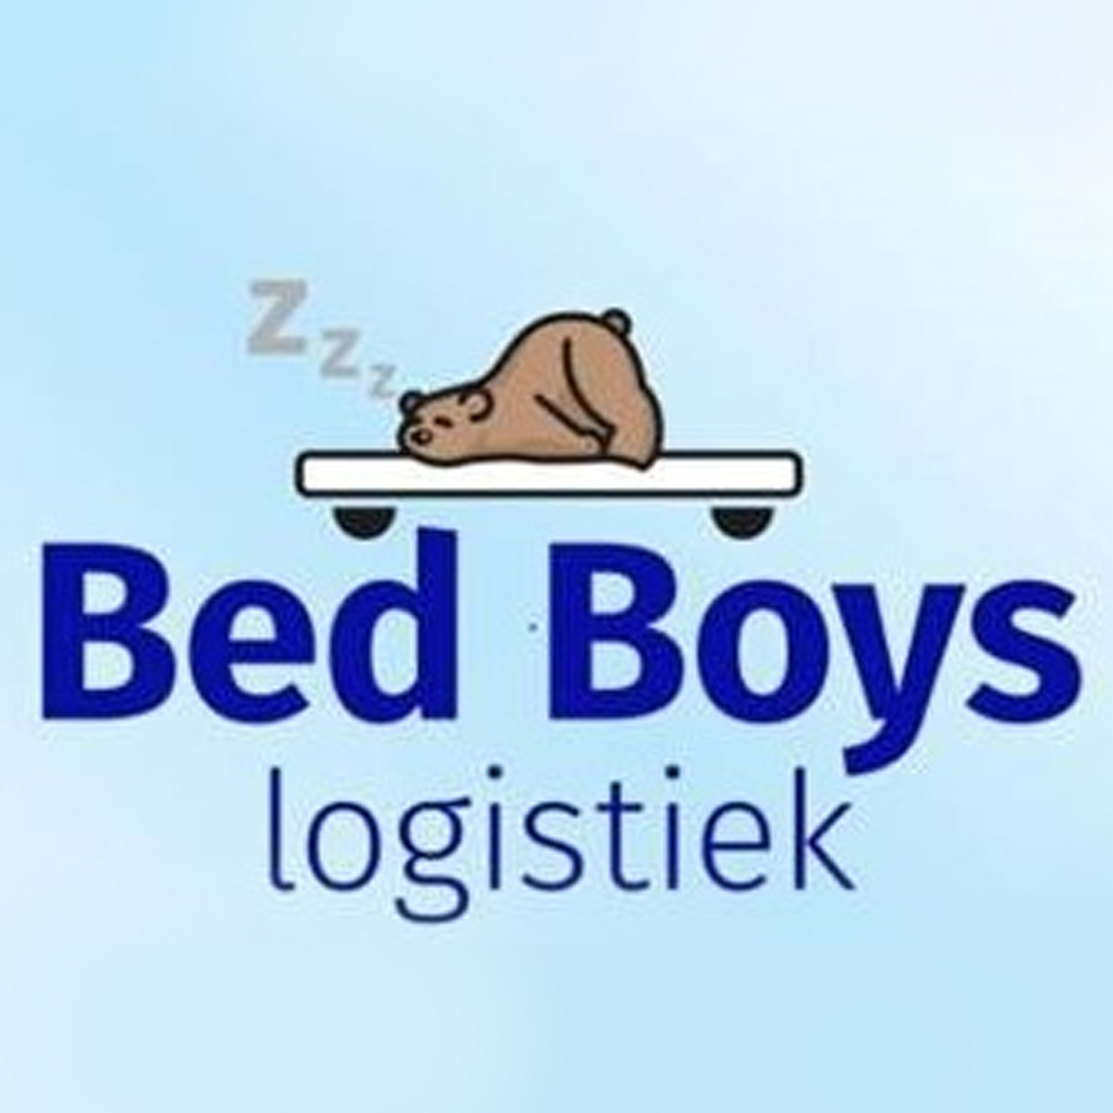 Bed Boys logistiek 